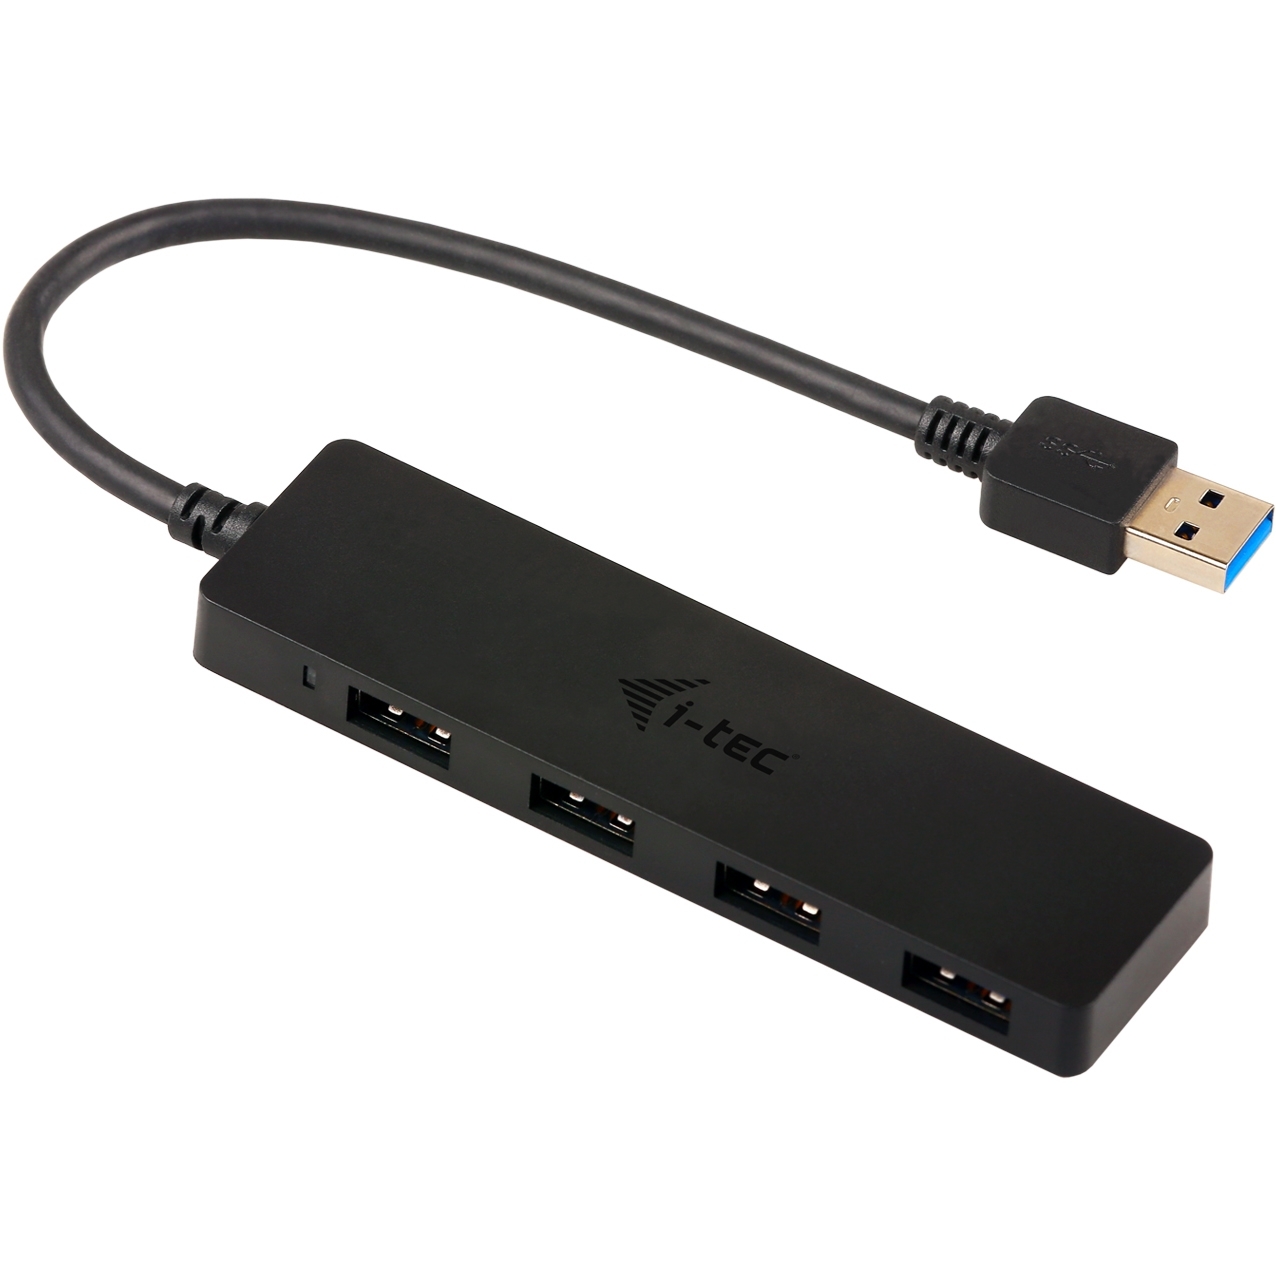 i-tec USB 3.0 4-Port kein Netzadapter nötig [Für Notebook, Ultrabook, Tablet und PC] von i-tec